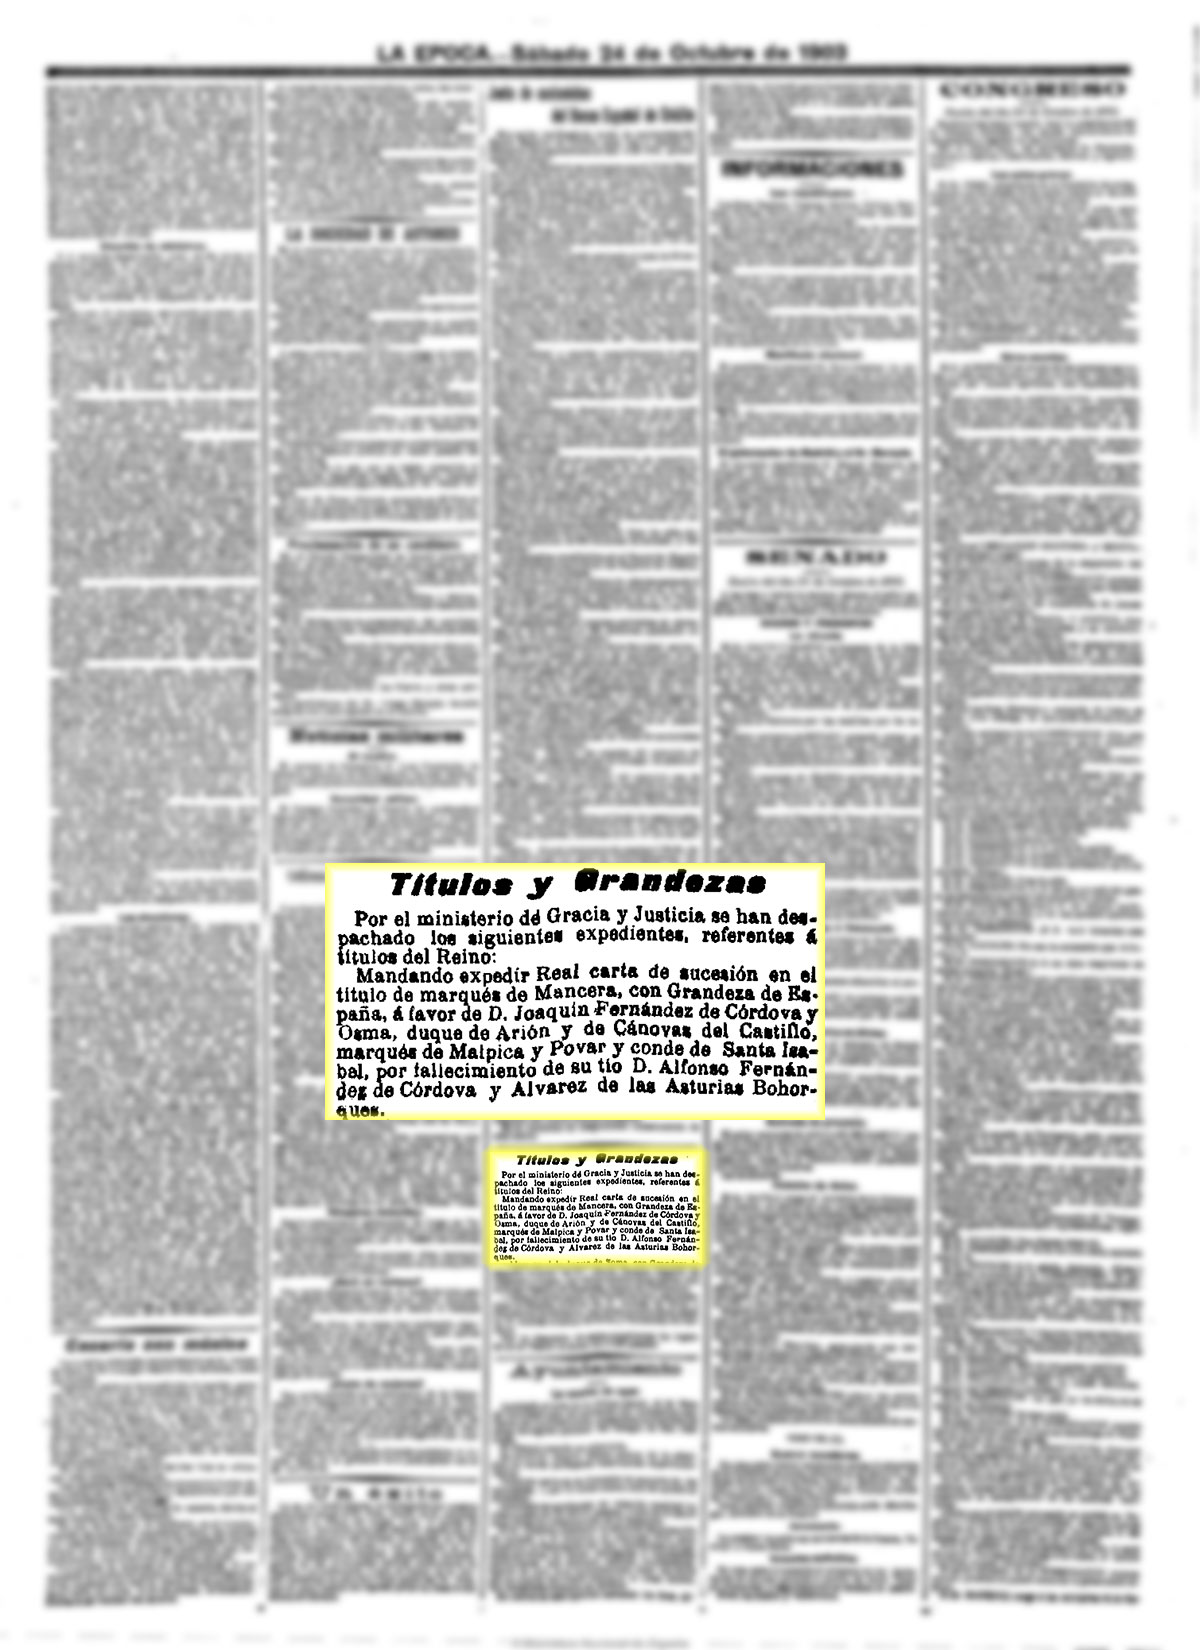 La Época  24-10-1903, n.º 19.171. Herencia del marquesado de Mancera